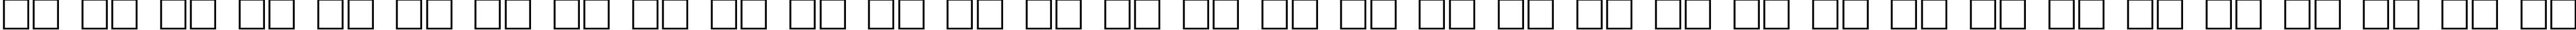 Пример написания русского алфавита шрифтом CW Roundwrite Normal